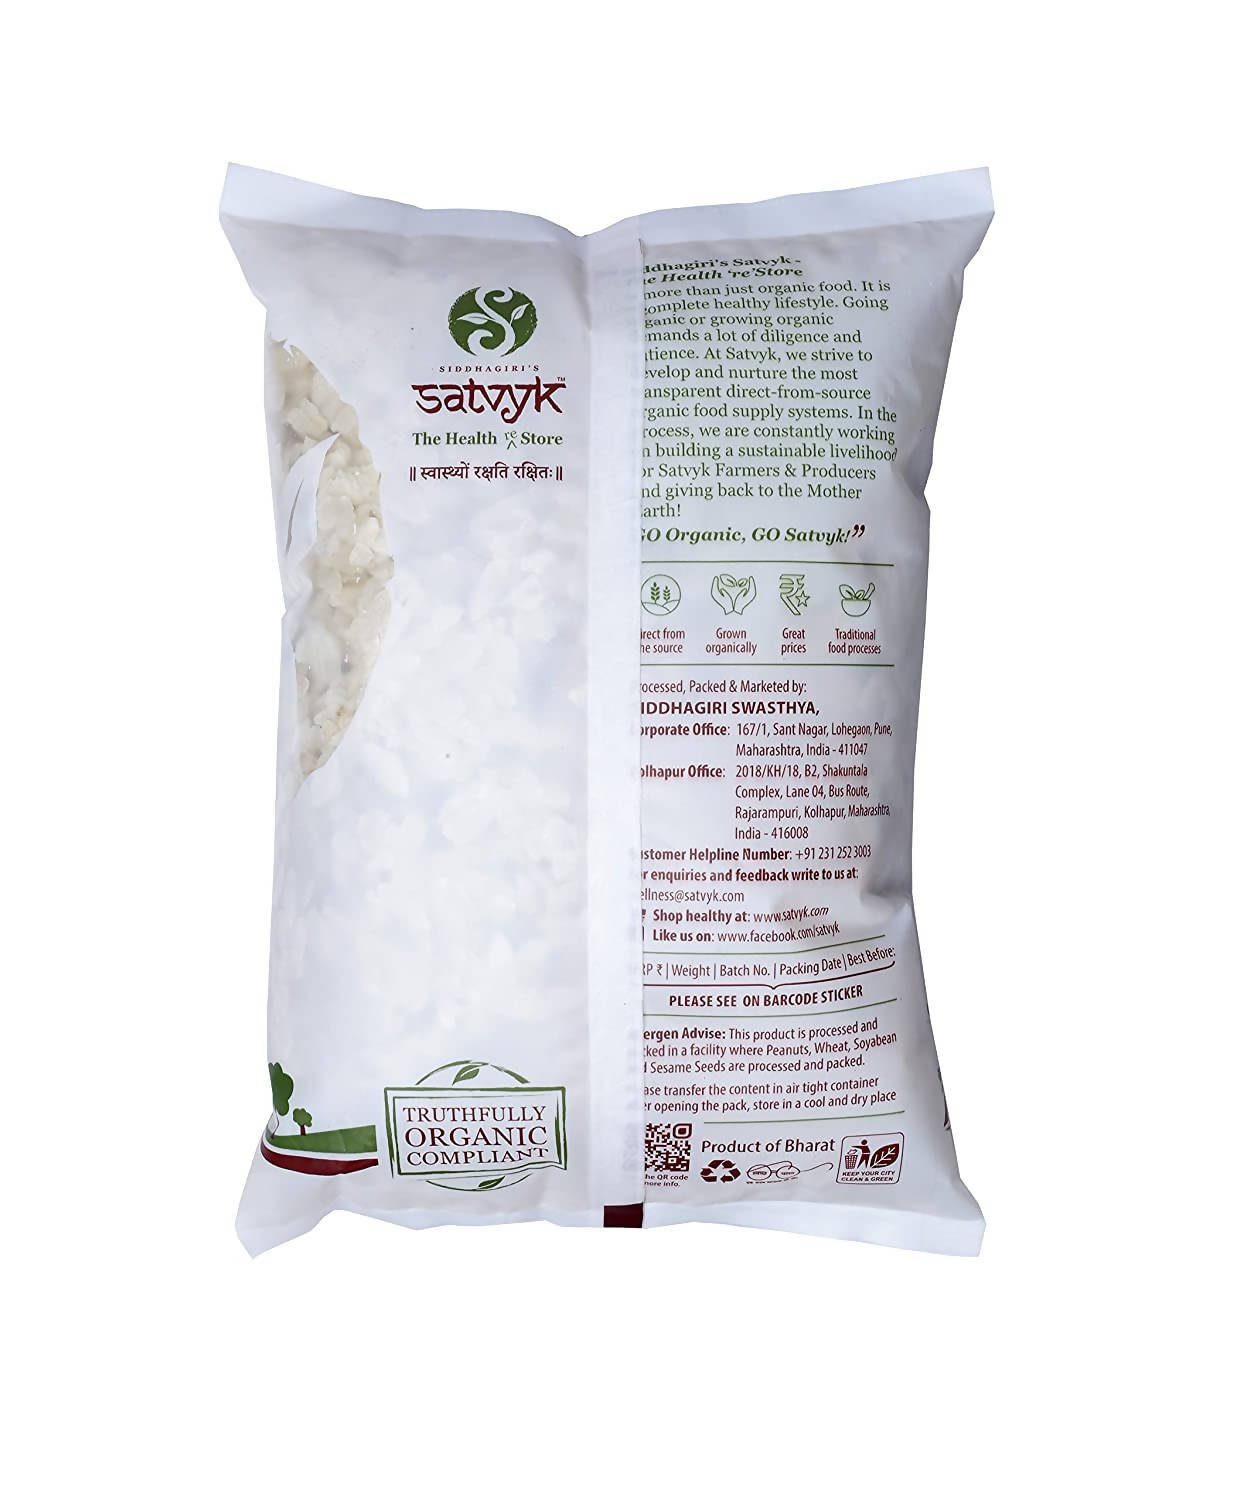 Siddhagiri's Satvyk Organic White Unpolished beaten Rice (Poha) back image